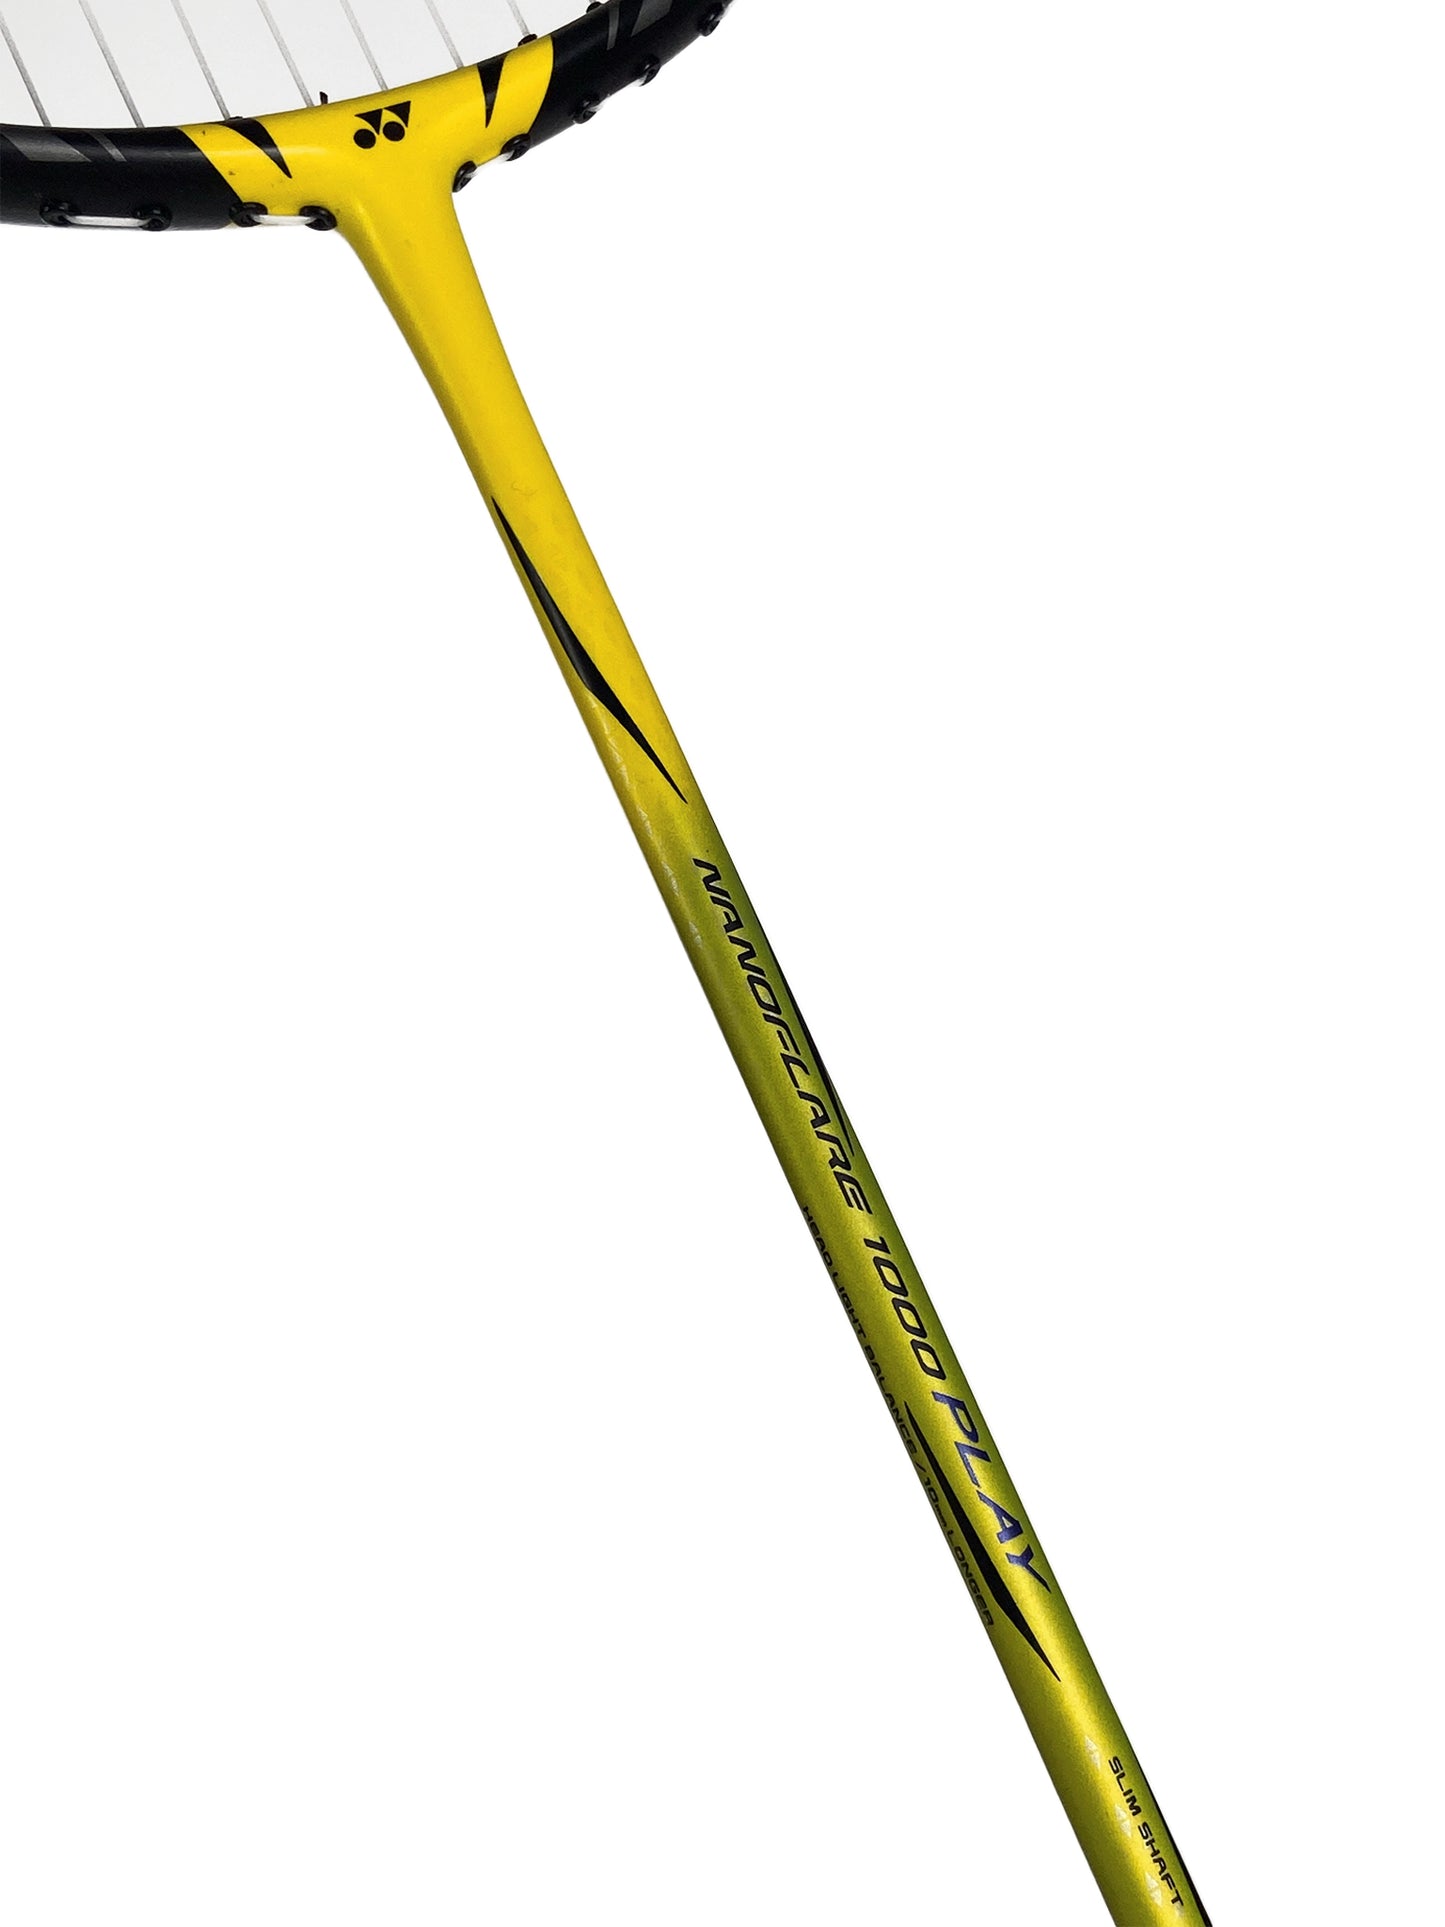 Yonex Nanoflare 1000 Play Lightning Yellow Strung - 4U